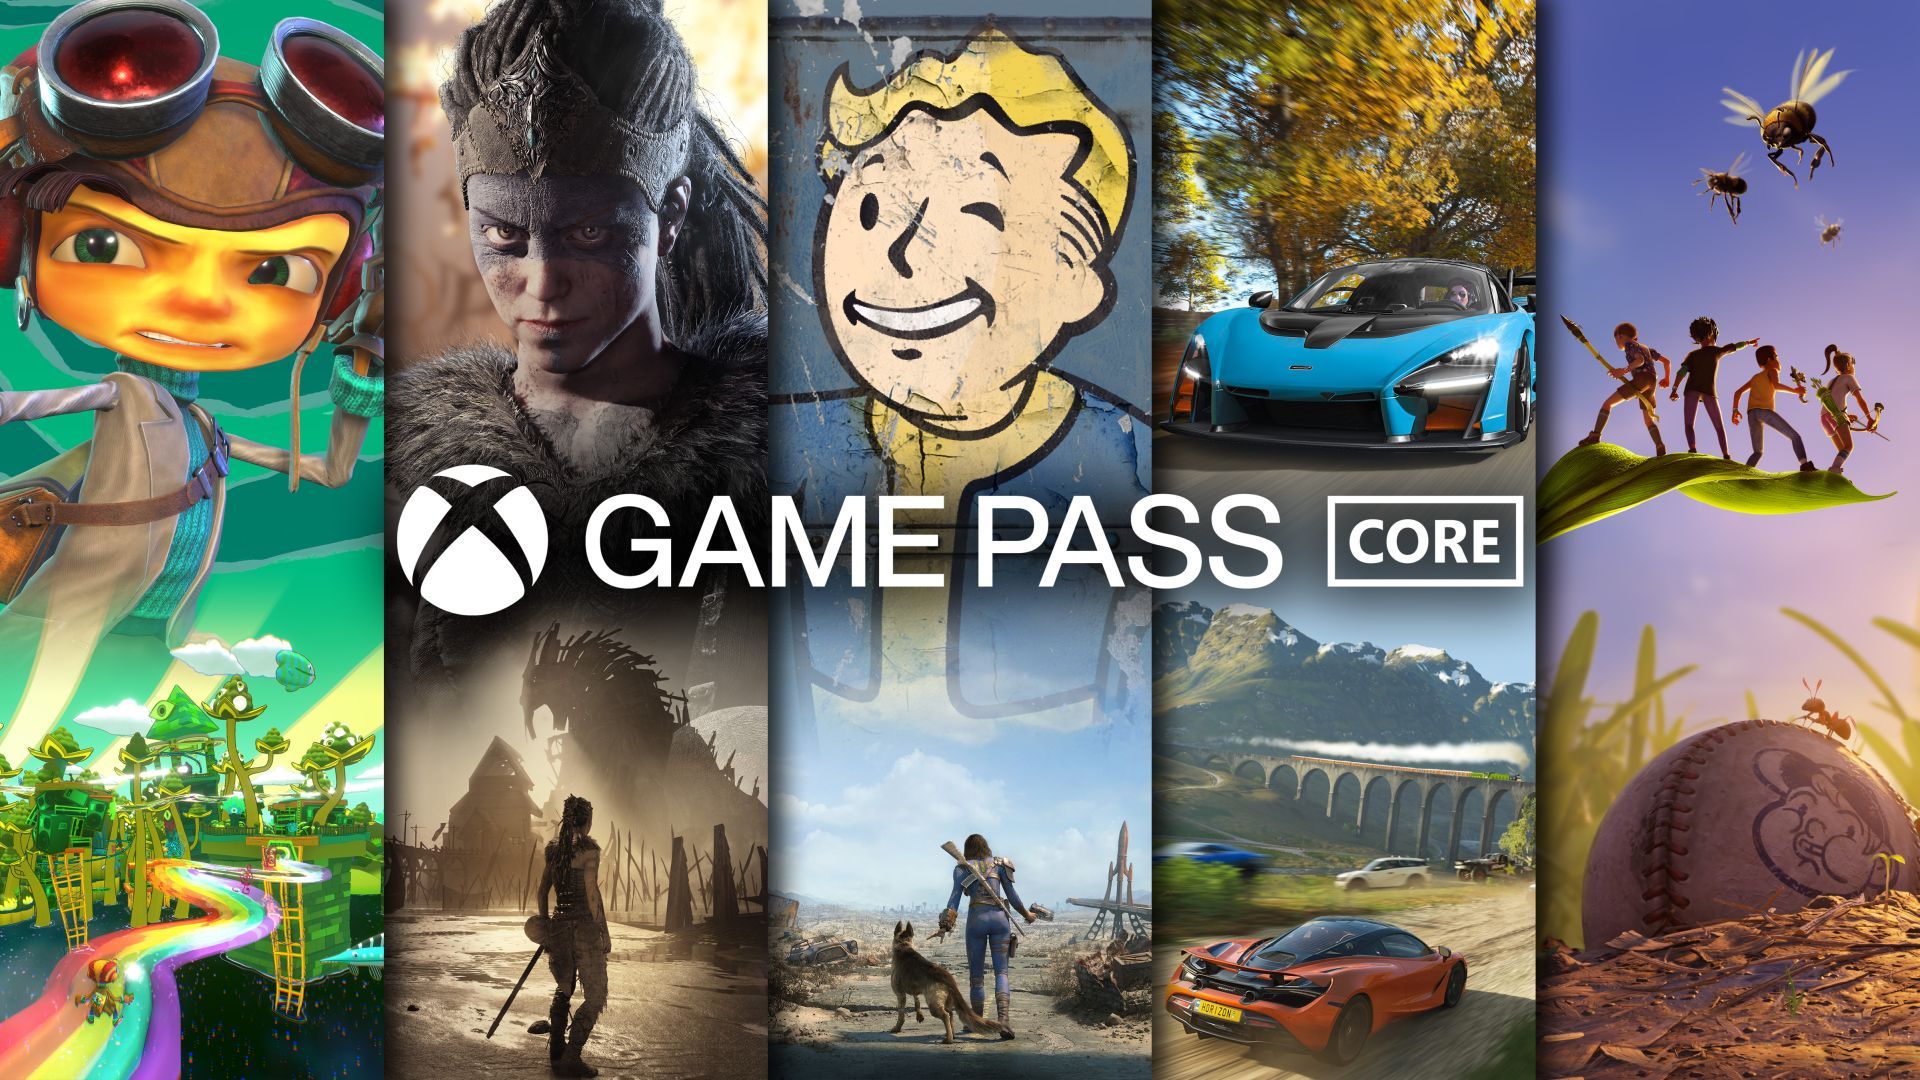 XBOX Game Pass Core 6 Months Subscription Card EU